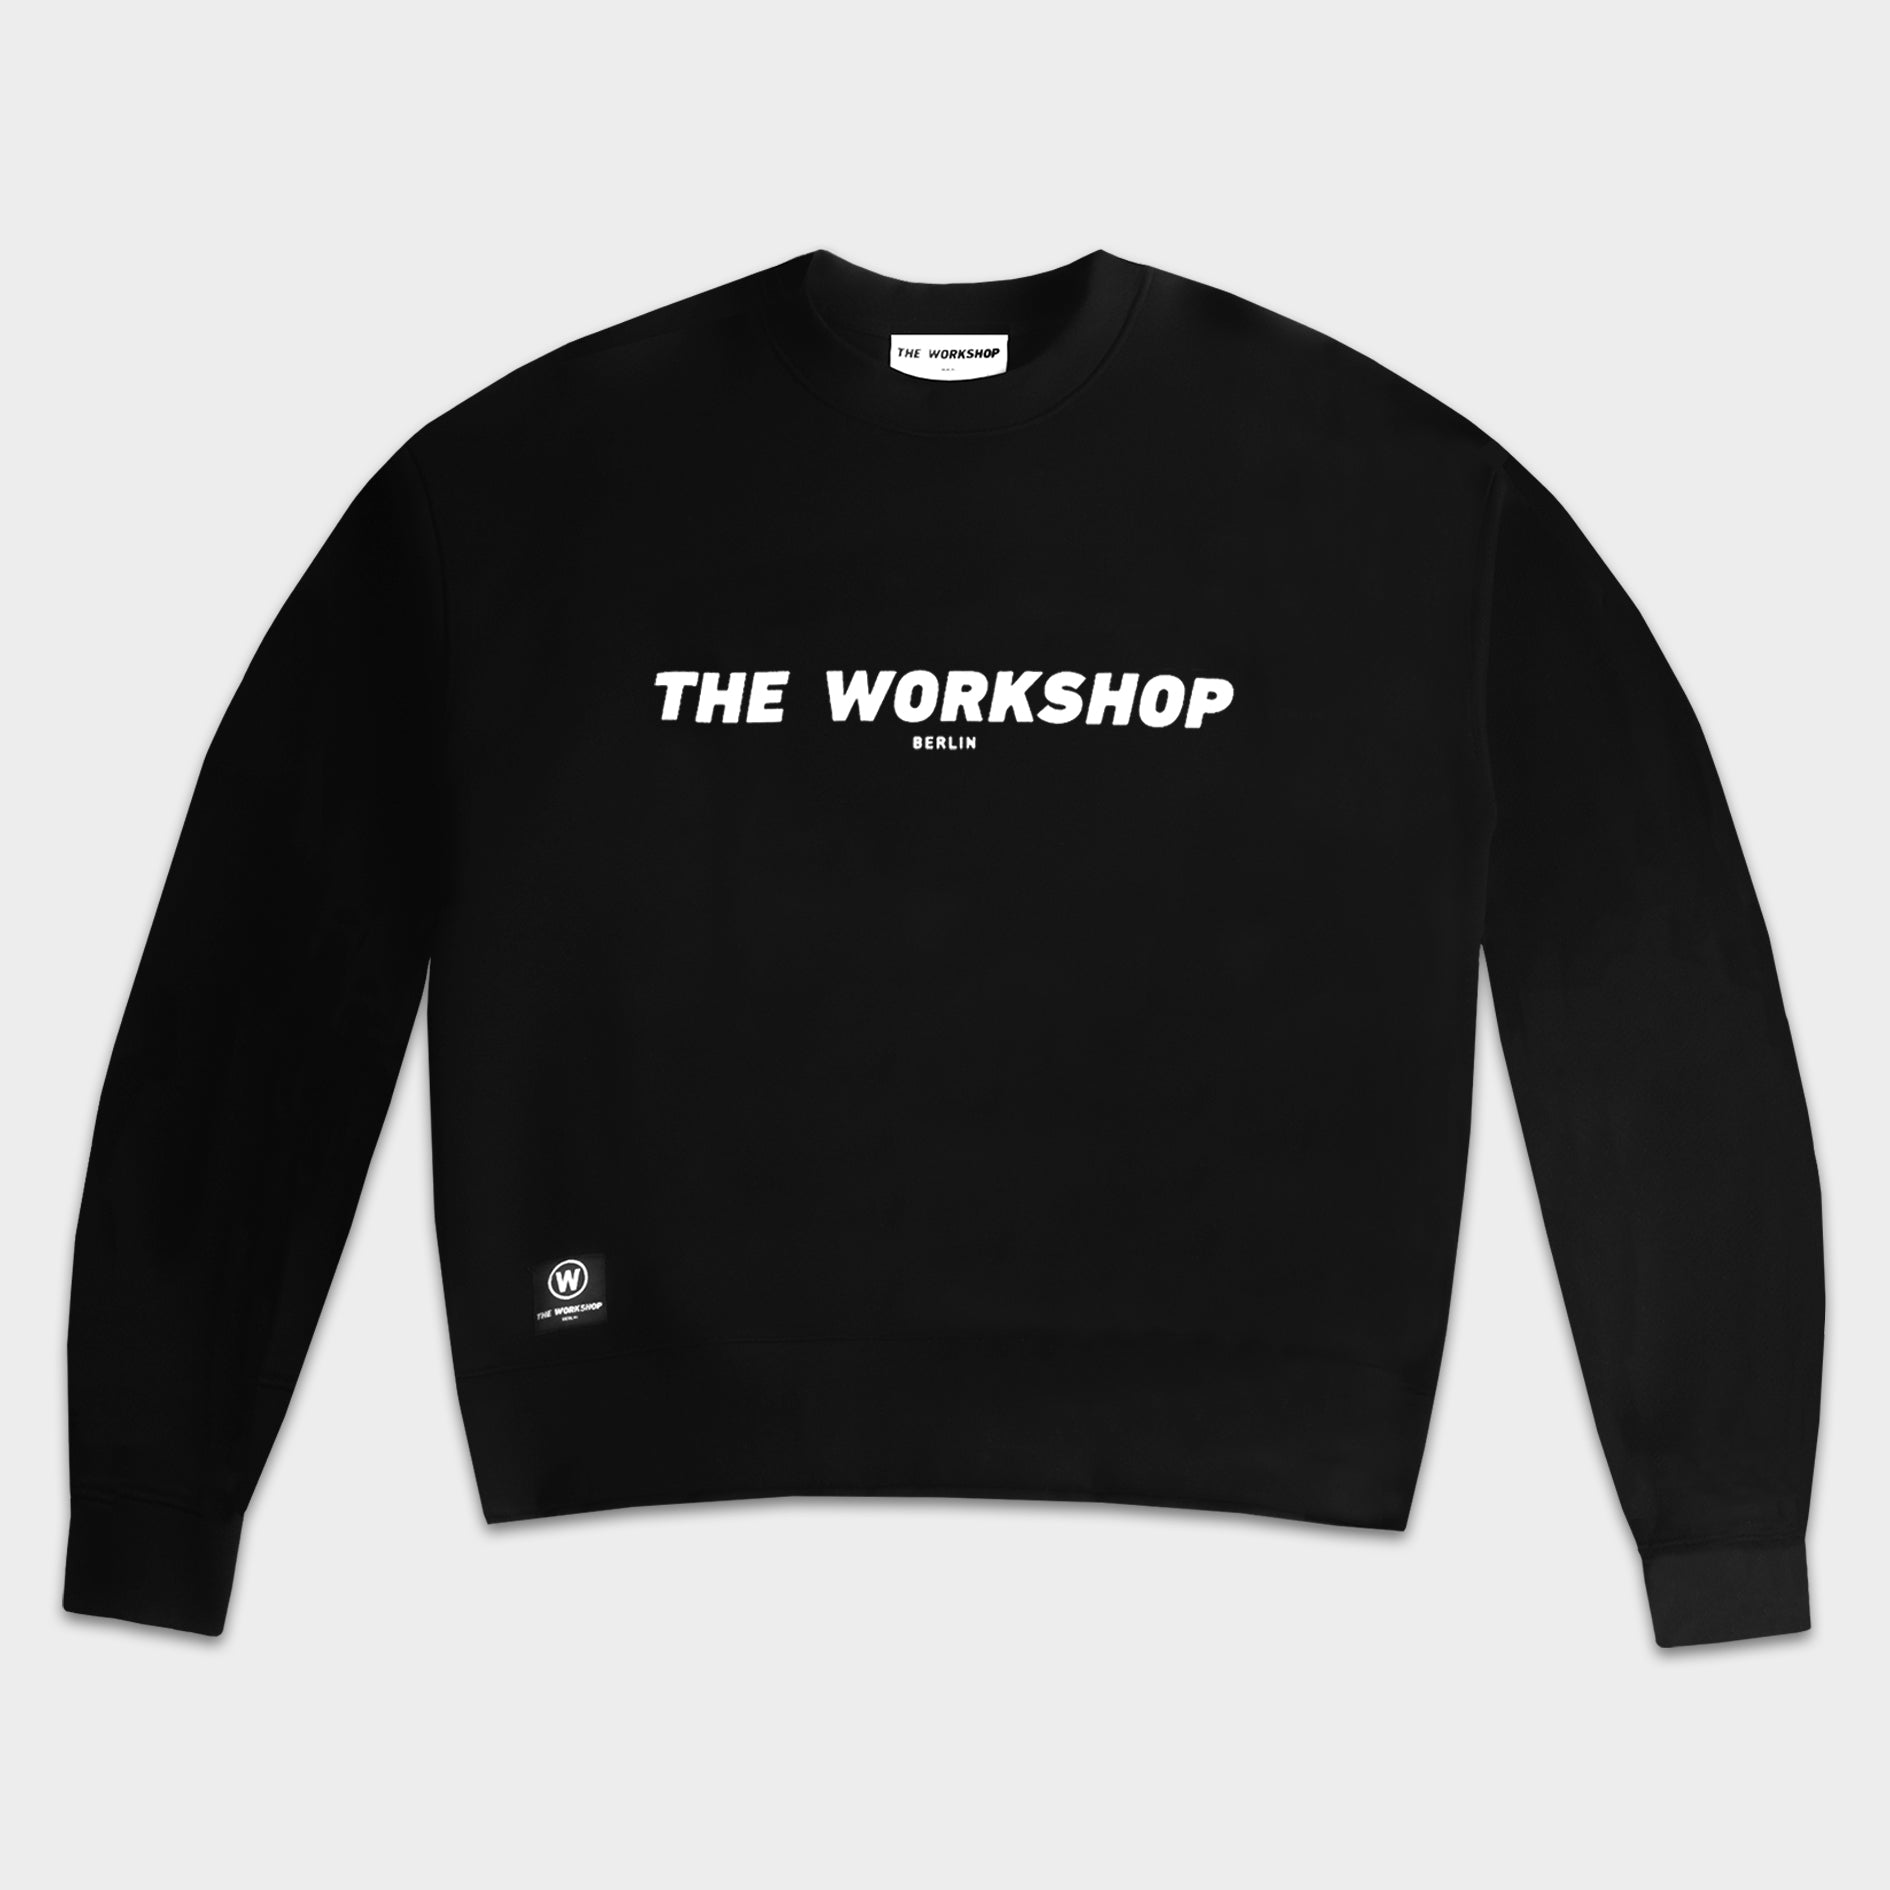 // The Workshop Berlin Sweater